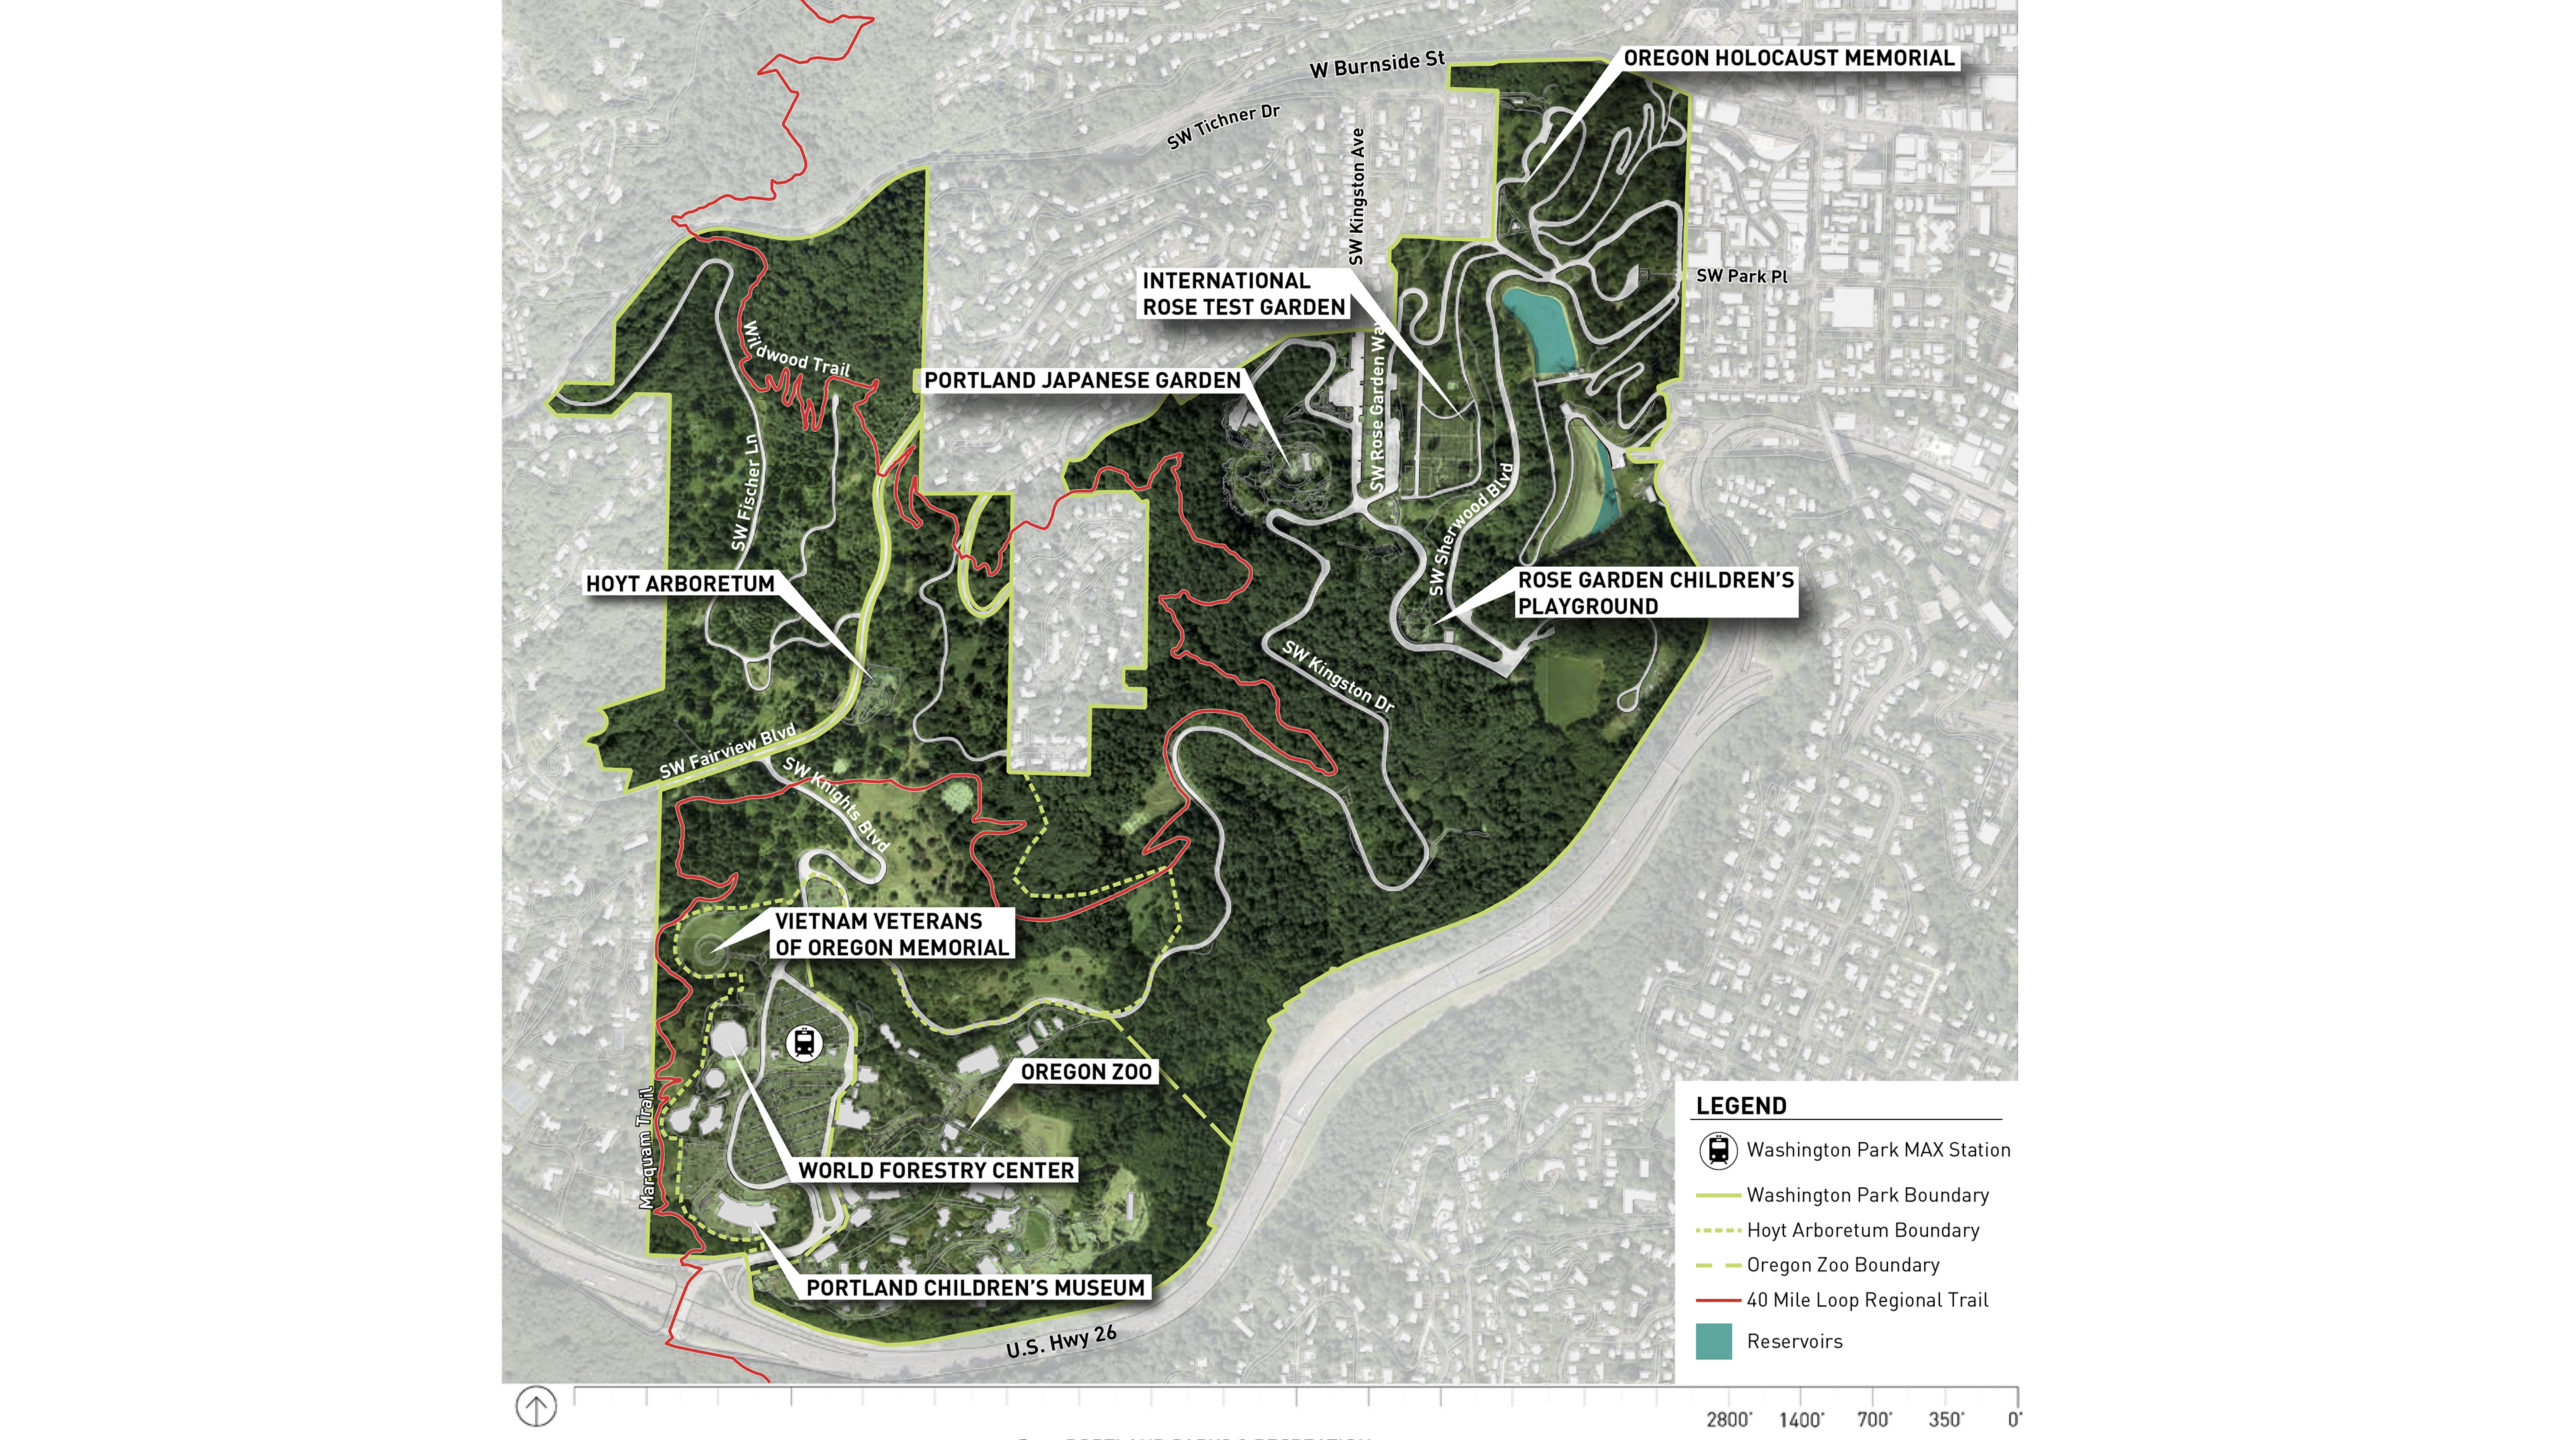 Washington Park Master Plan | Image 4/15